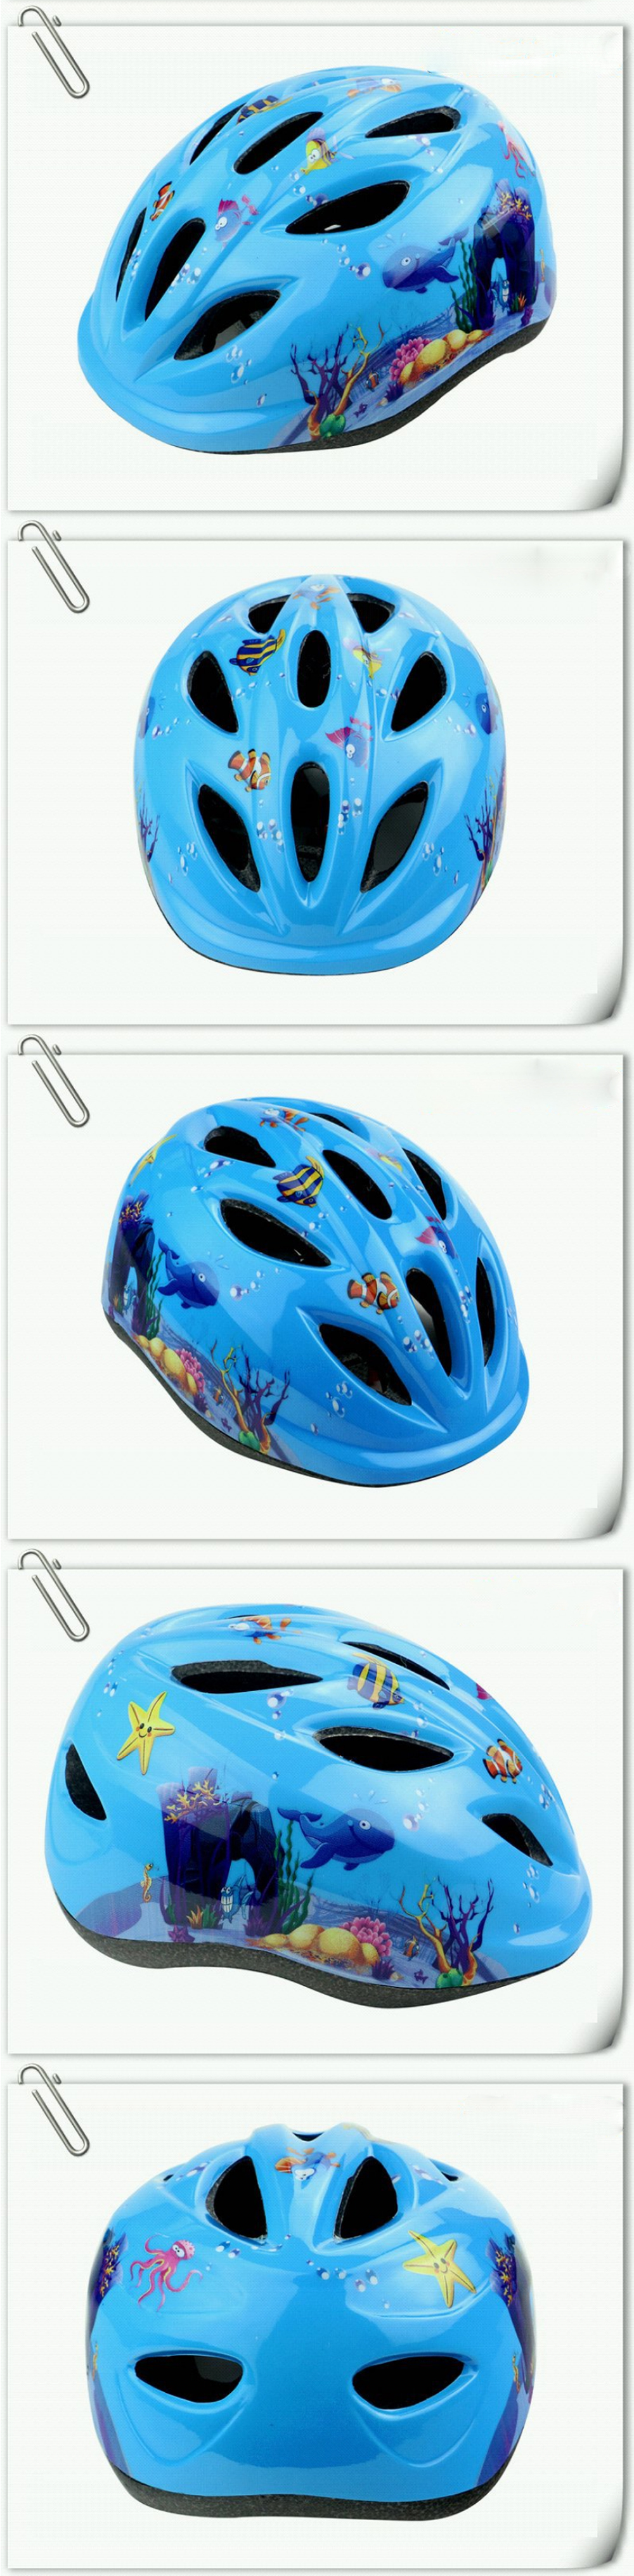 Adjustable-Toddler-Kids-Bicycle-Cycling-Helmet-Skating-Helmet-MTB-Bike-Mountain-Road-Cycling-Safety--1702808-3